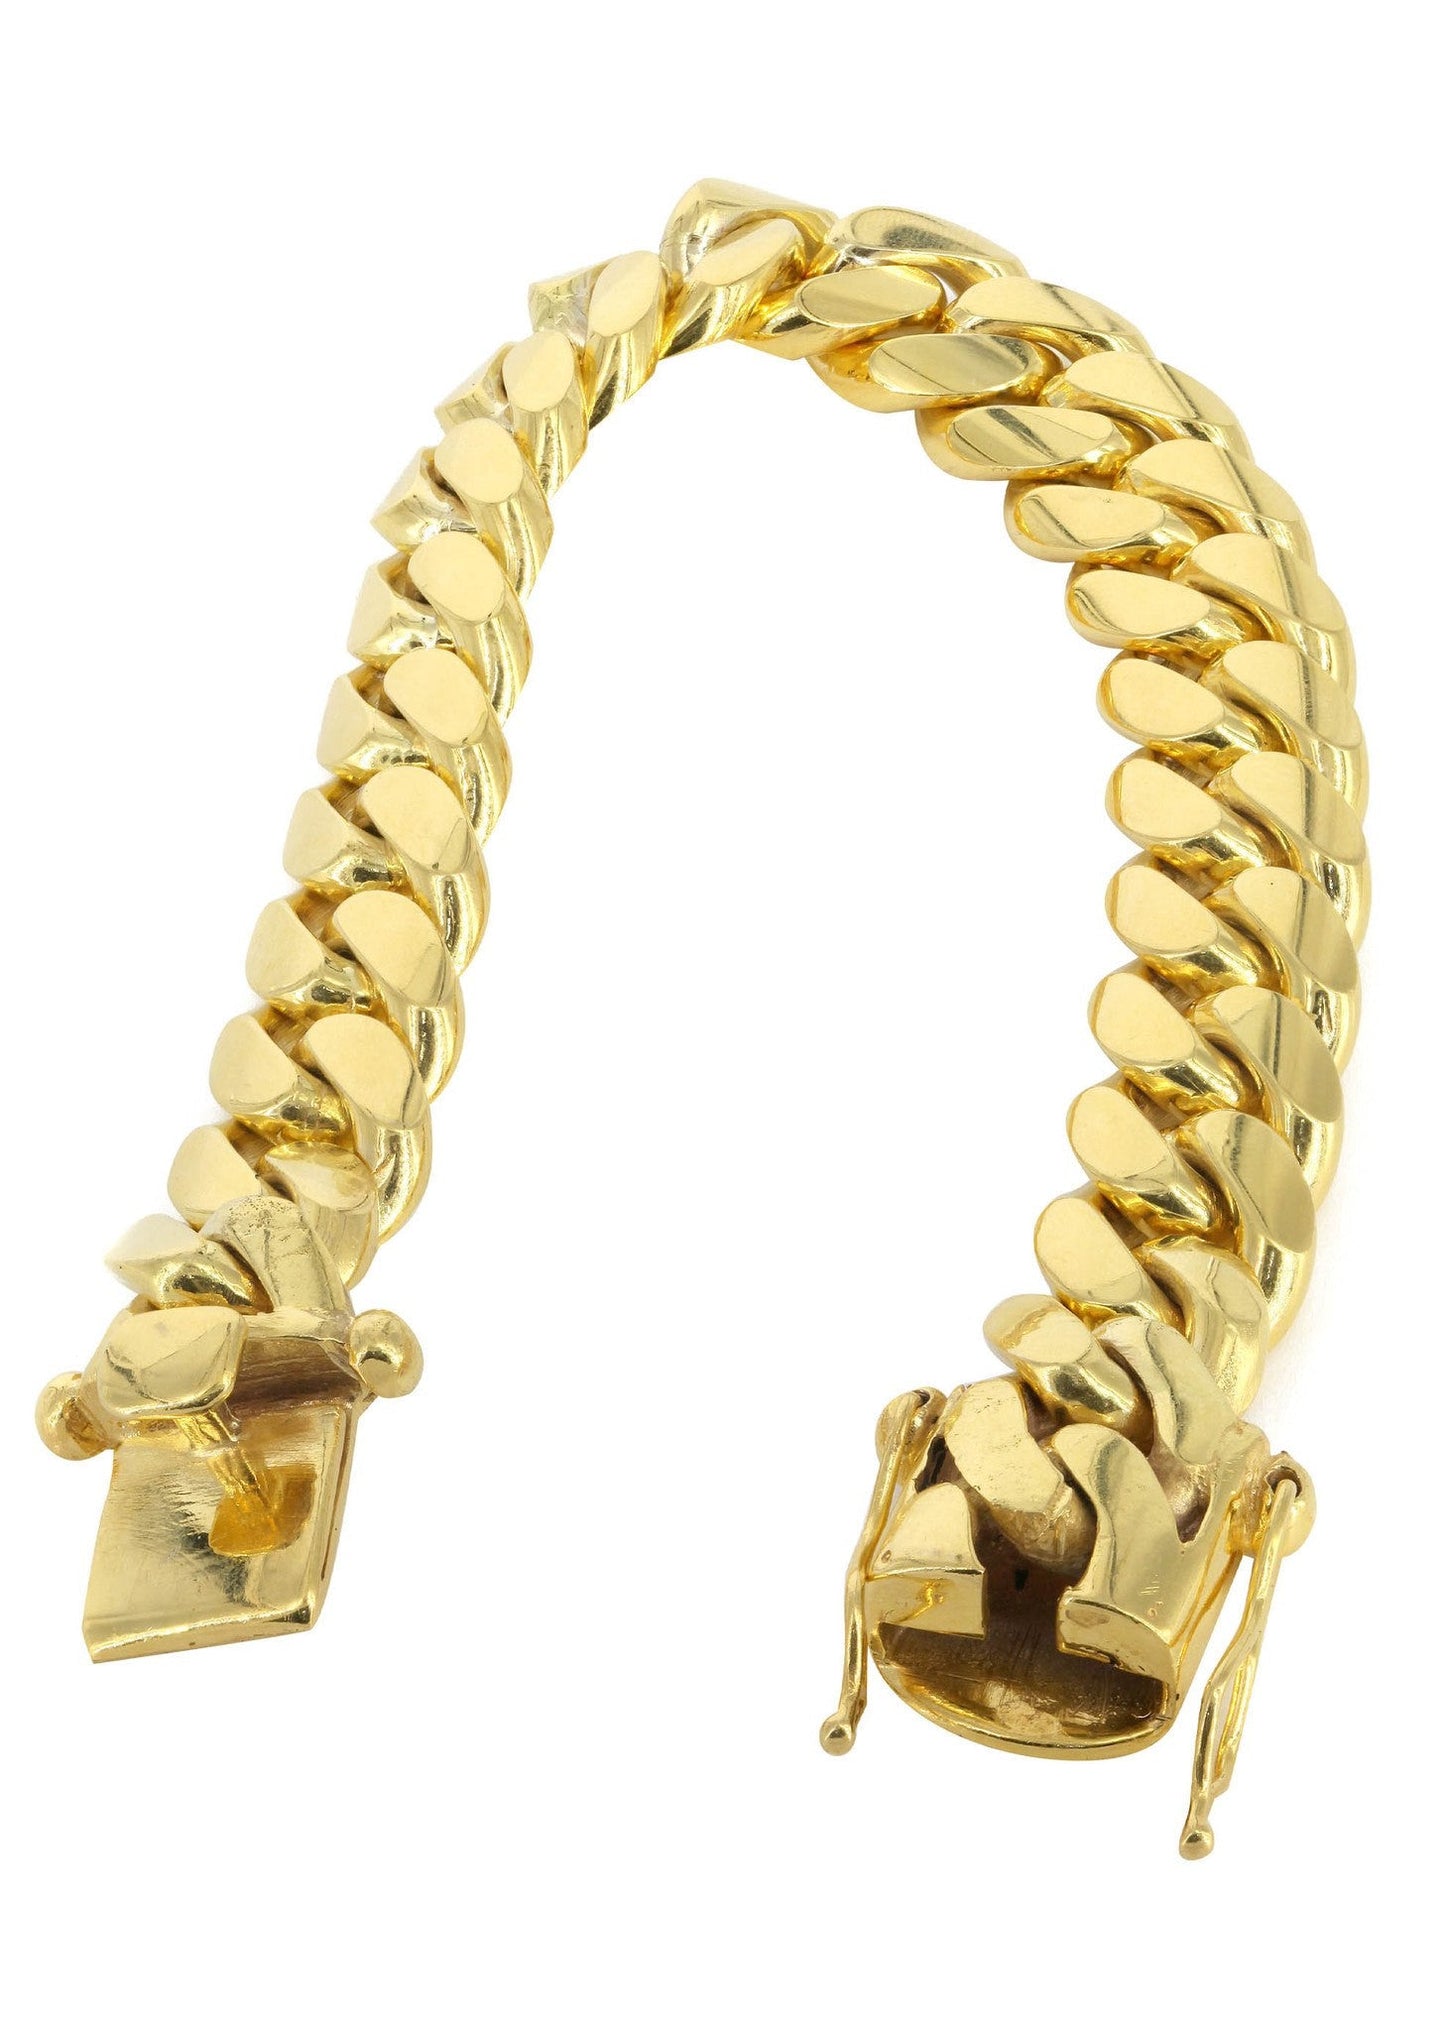 Solid Mens Miami Cuban Link Bracelet 10K Yellow Gold Men's Gold Bracelets FROST NYC 